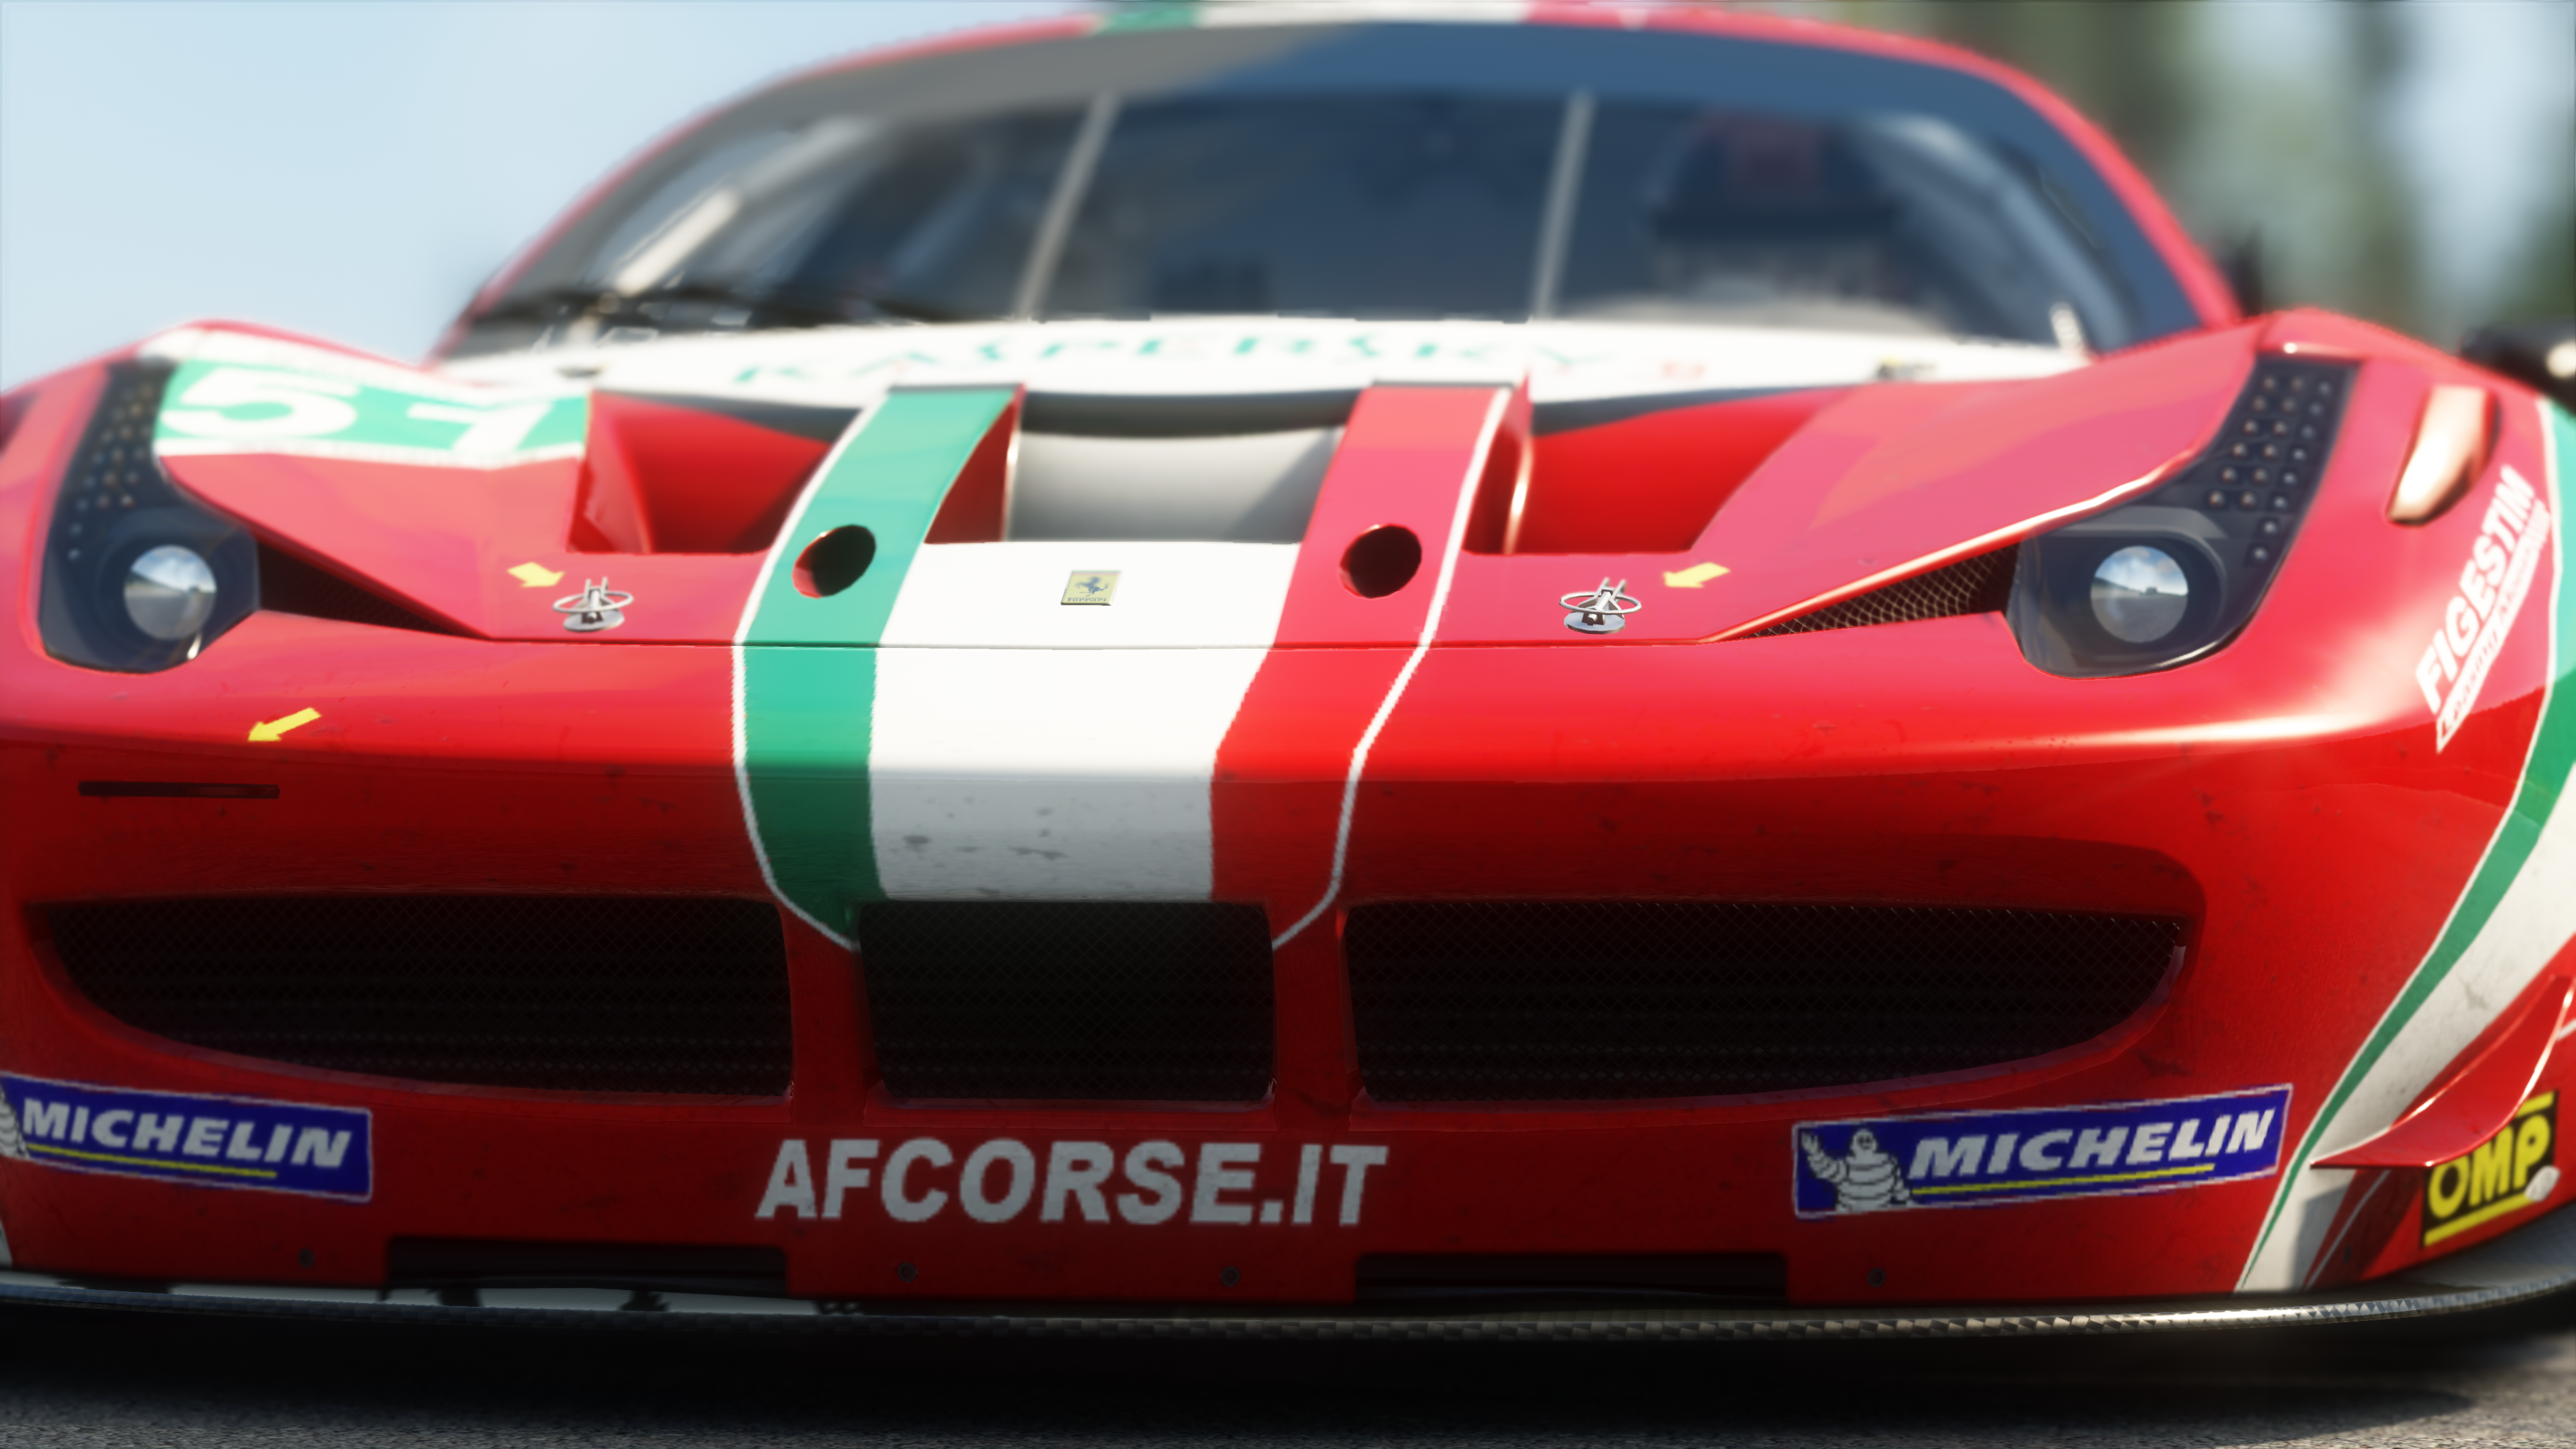 General 3840x2160 car vehicle Ferrari Assetto Corsa video games red cars racing